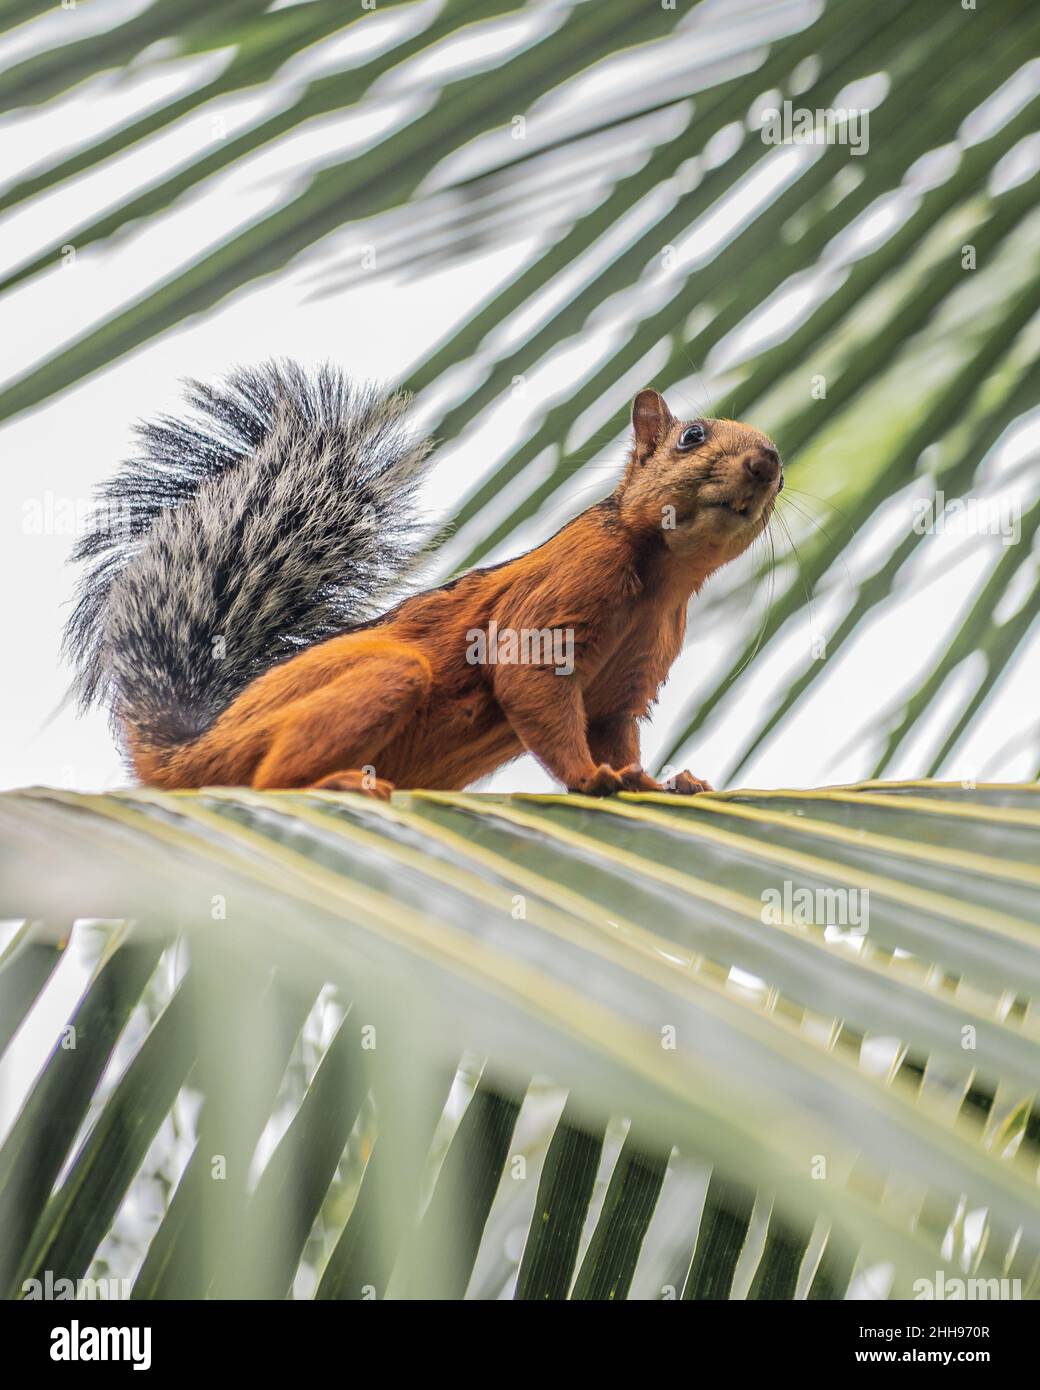 Big red squirrel in Santa Teresa, costa rica Stock Photo